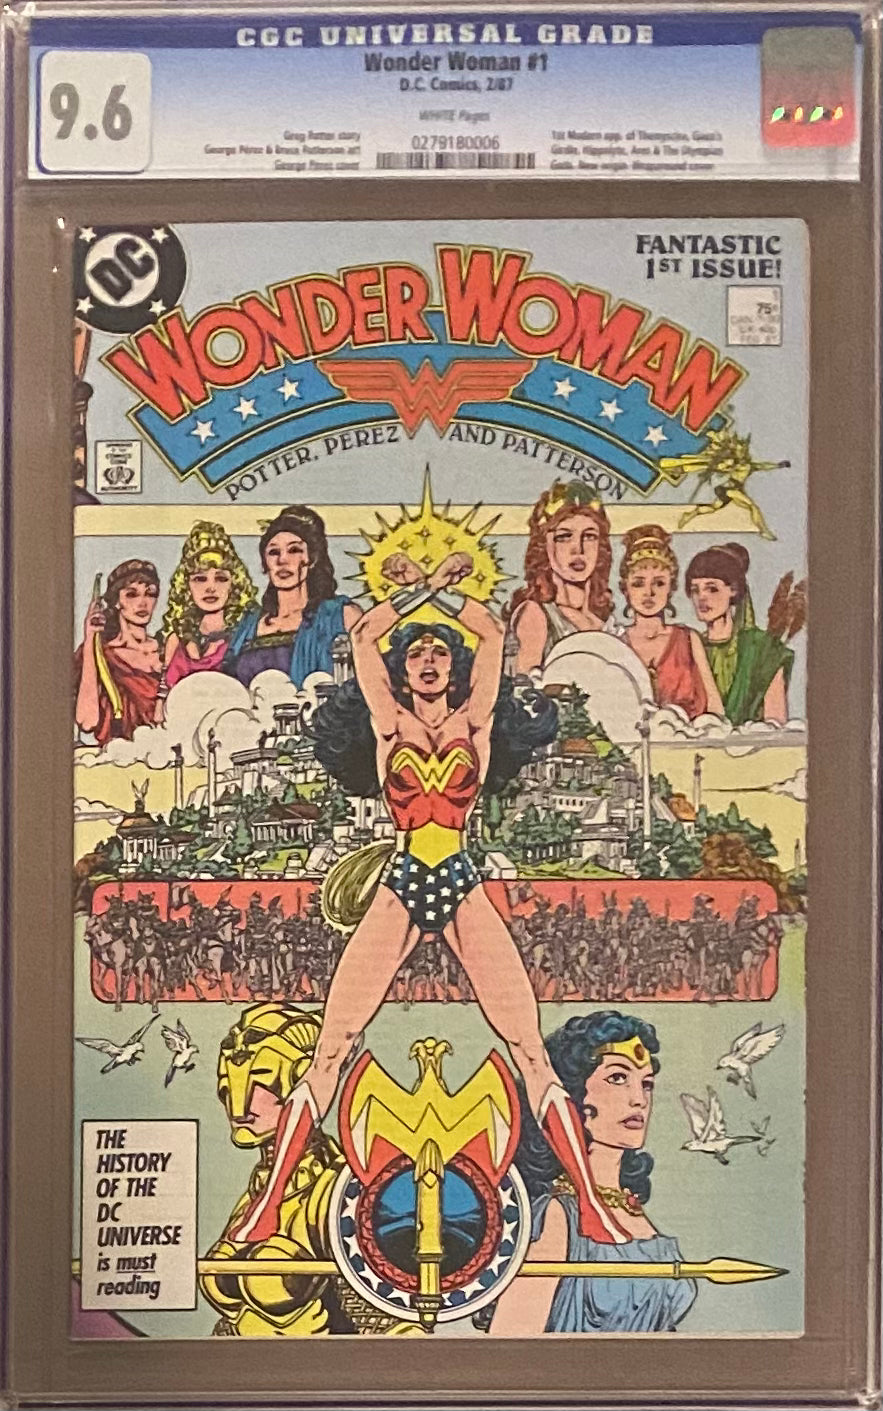 Wonder Woman #1 CGC 9.6